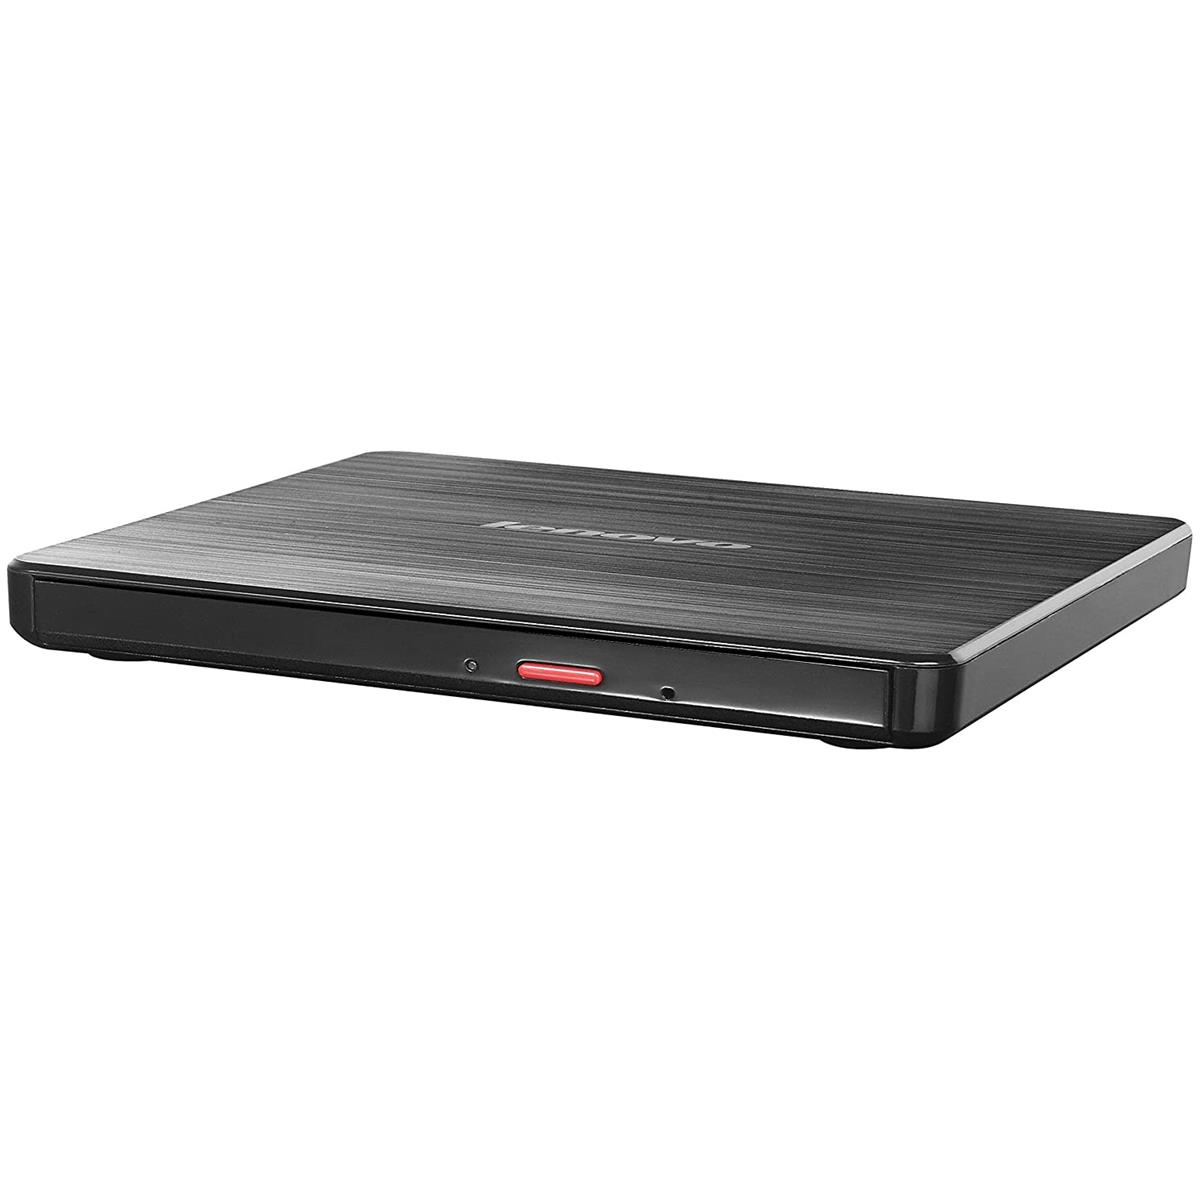 Image of Lenovo DB65 Slim USB External DVD Burner